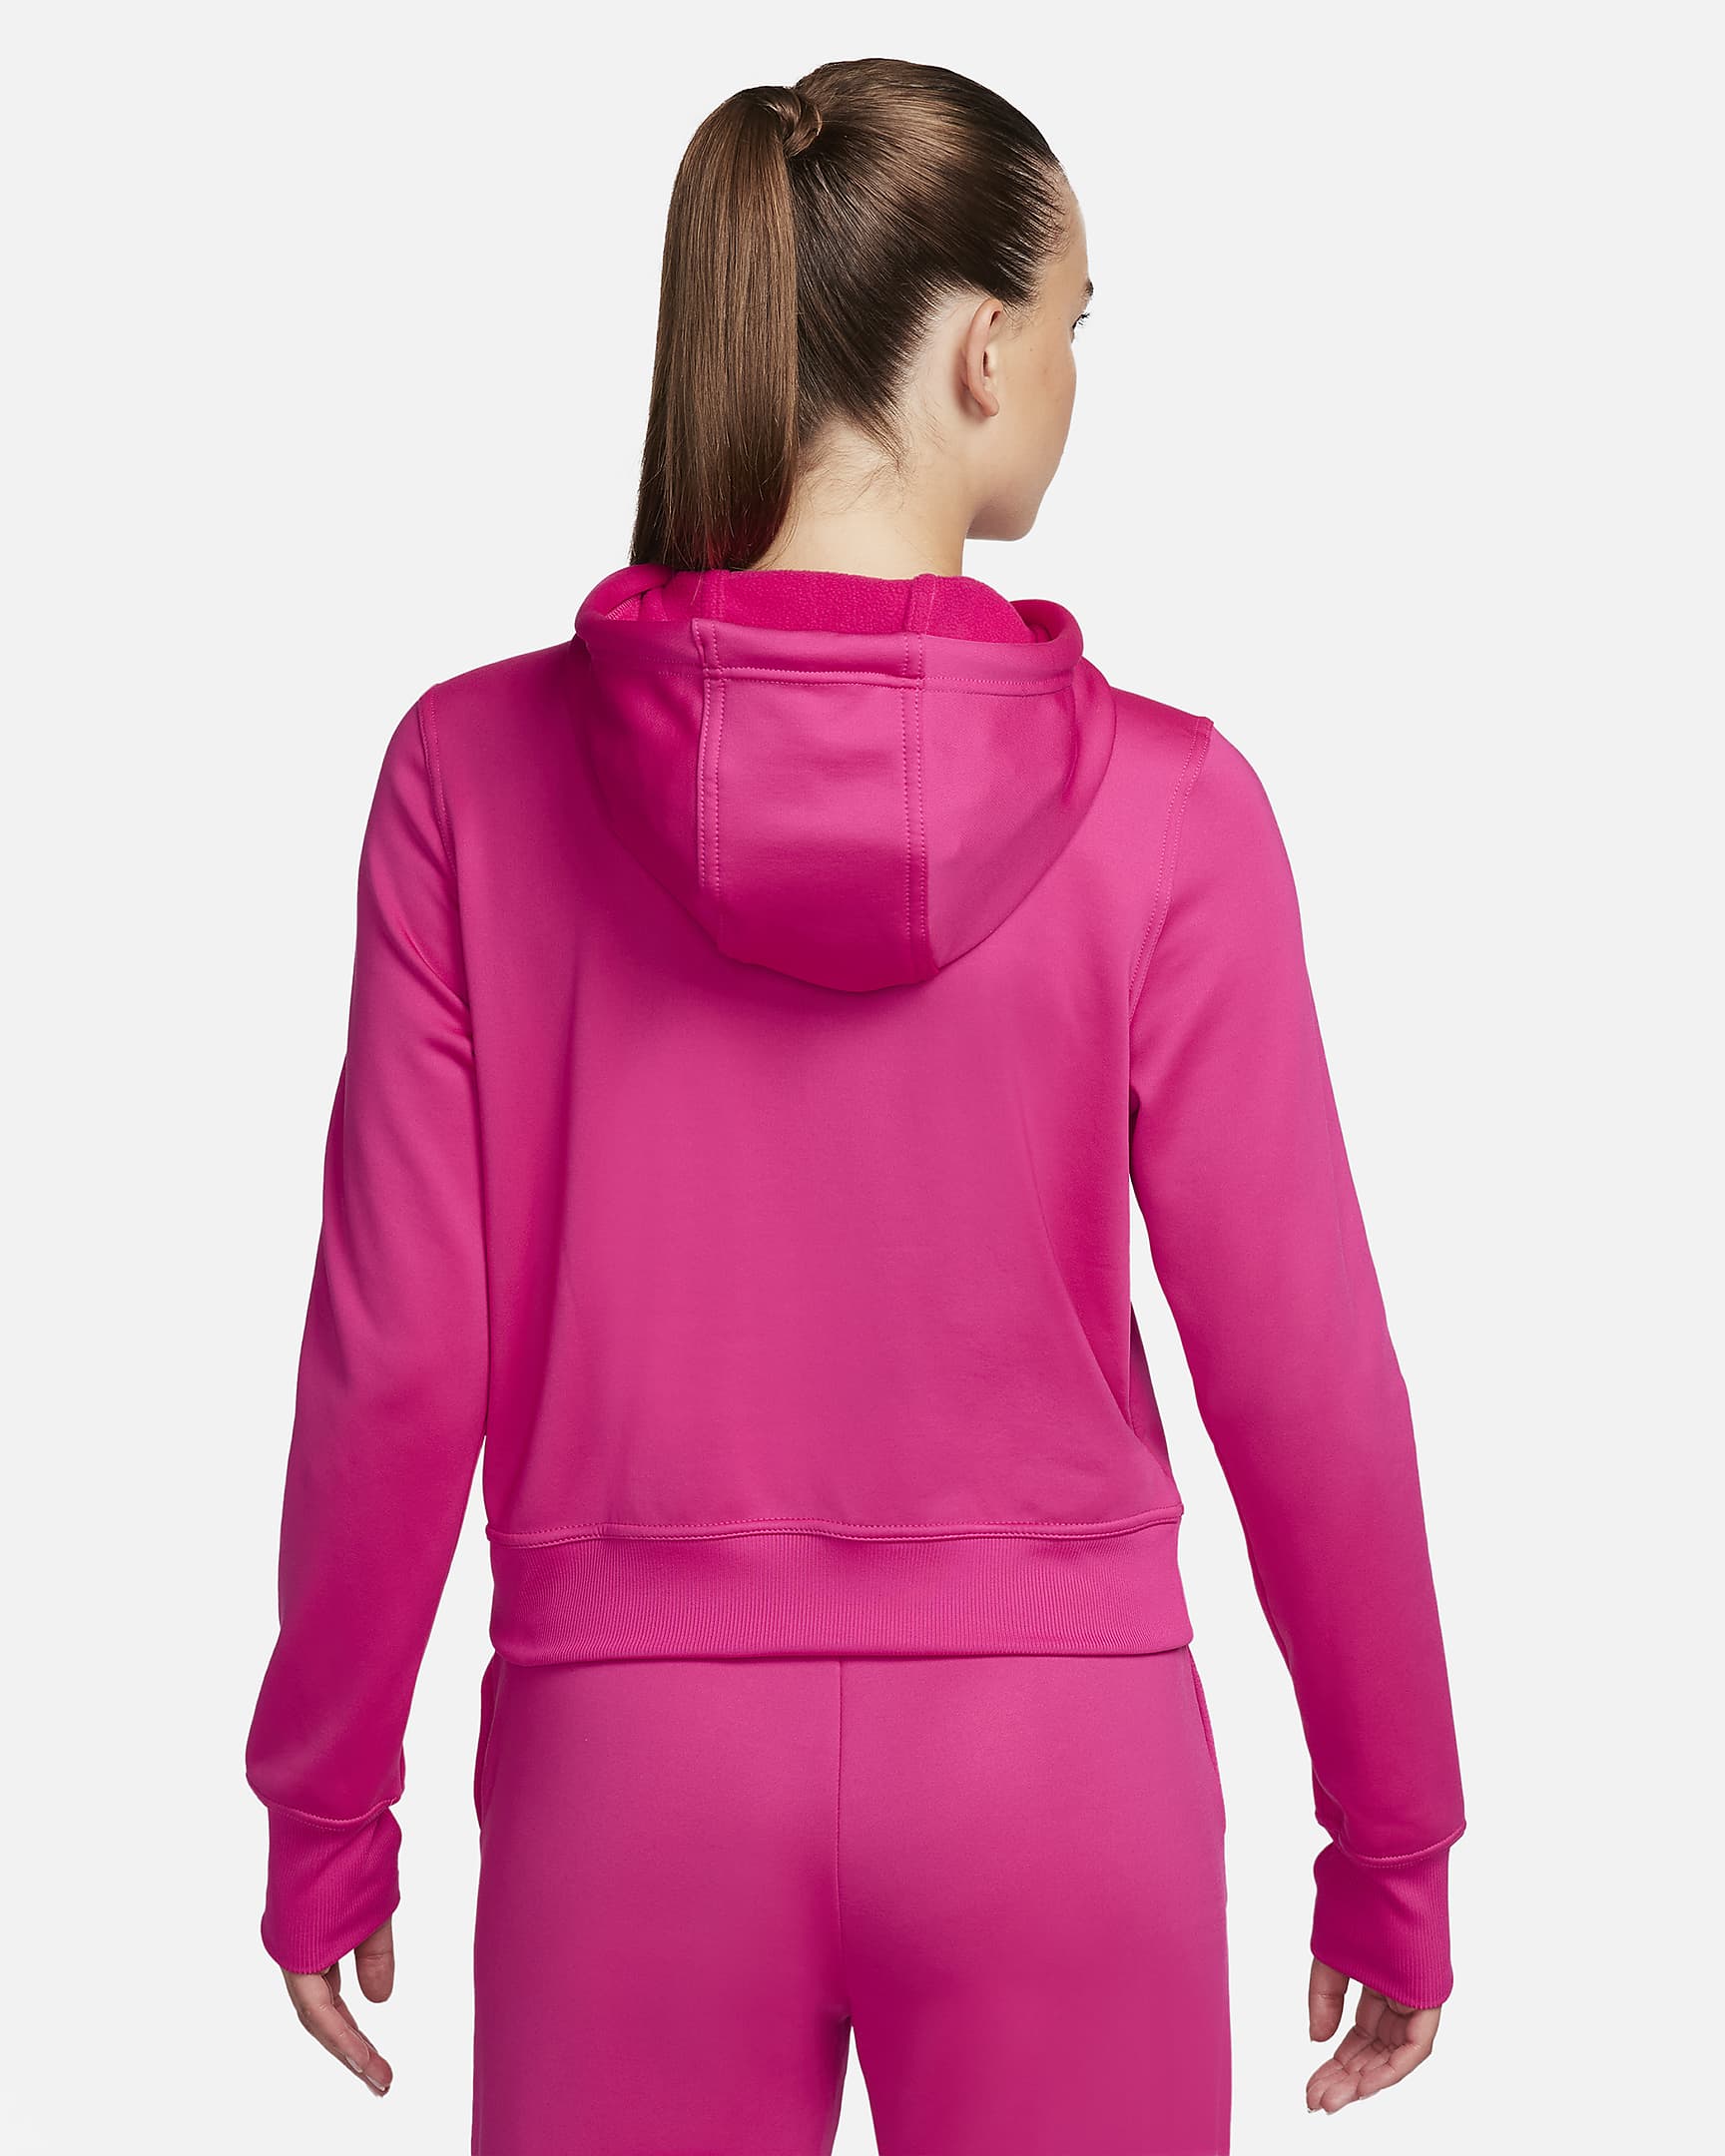 Nike Therma-FIT One Women's Pullover Hoodie. Nike LU